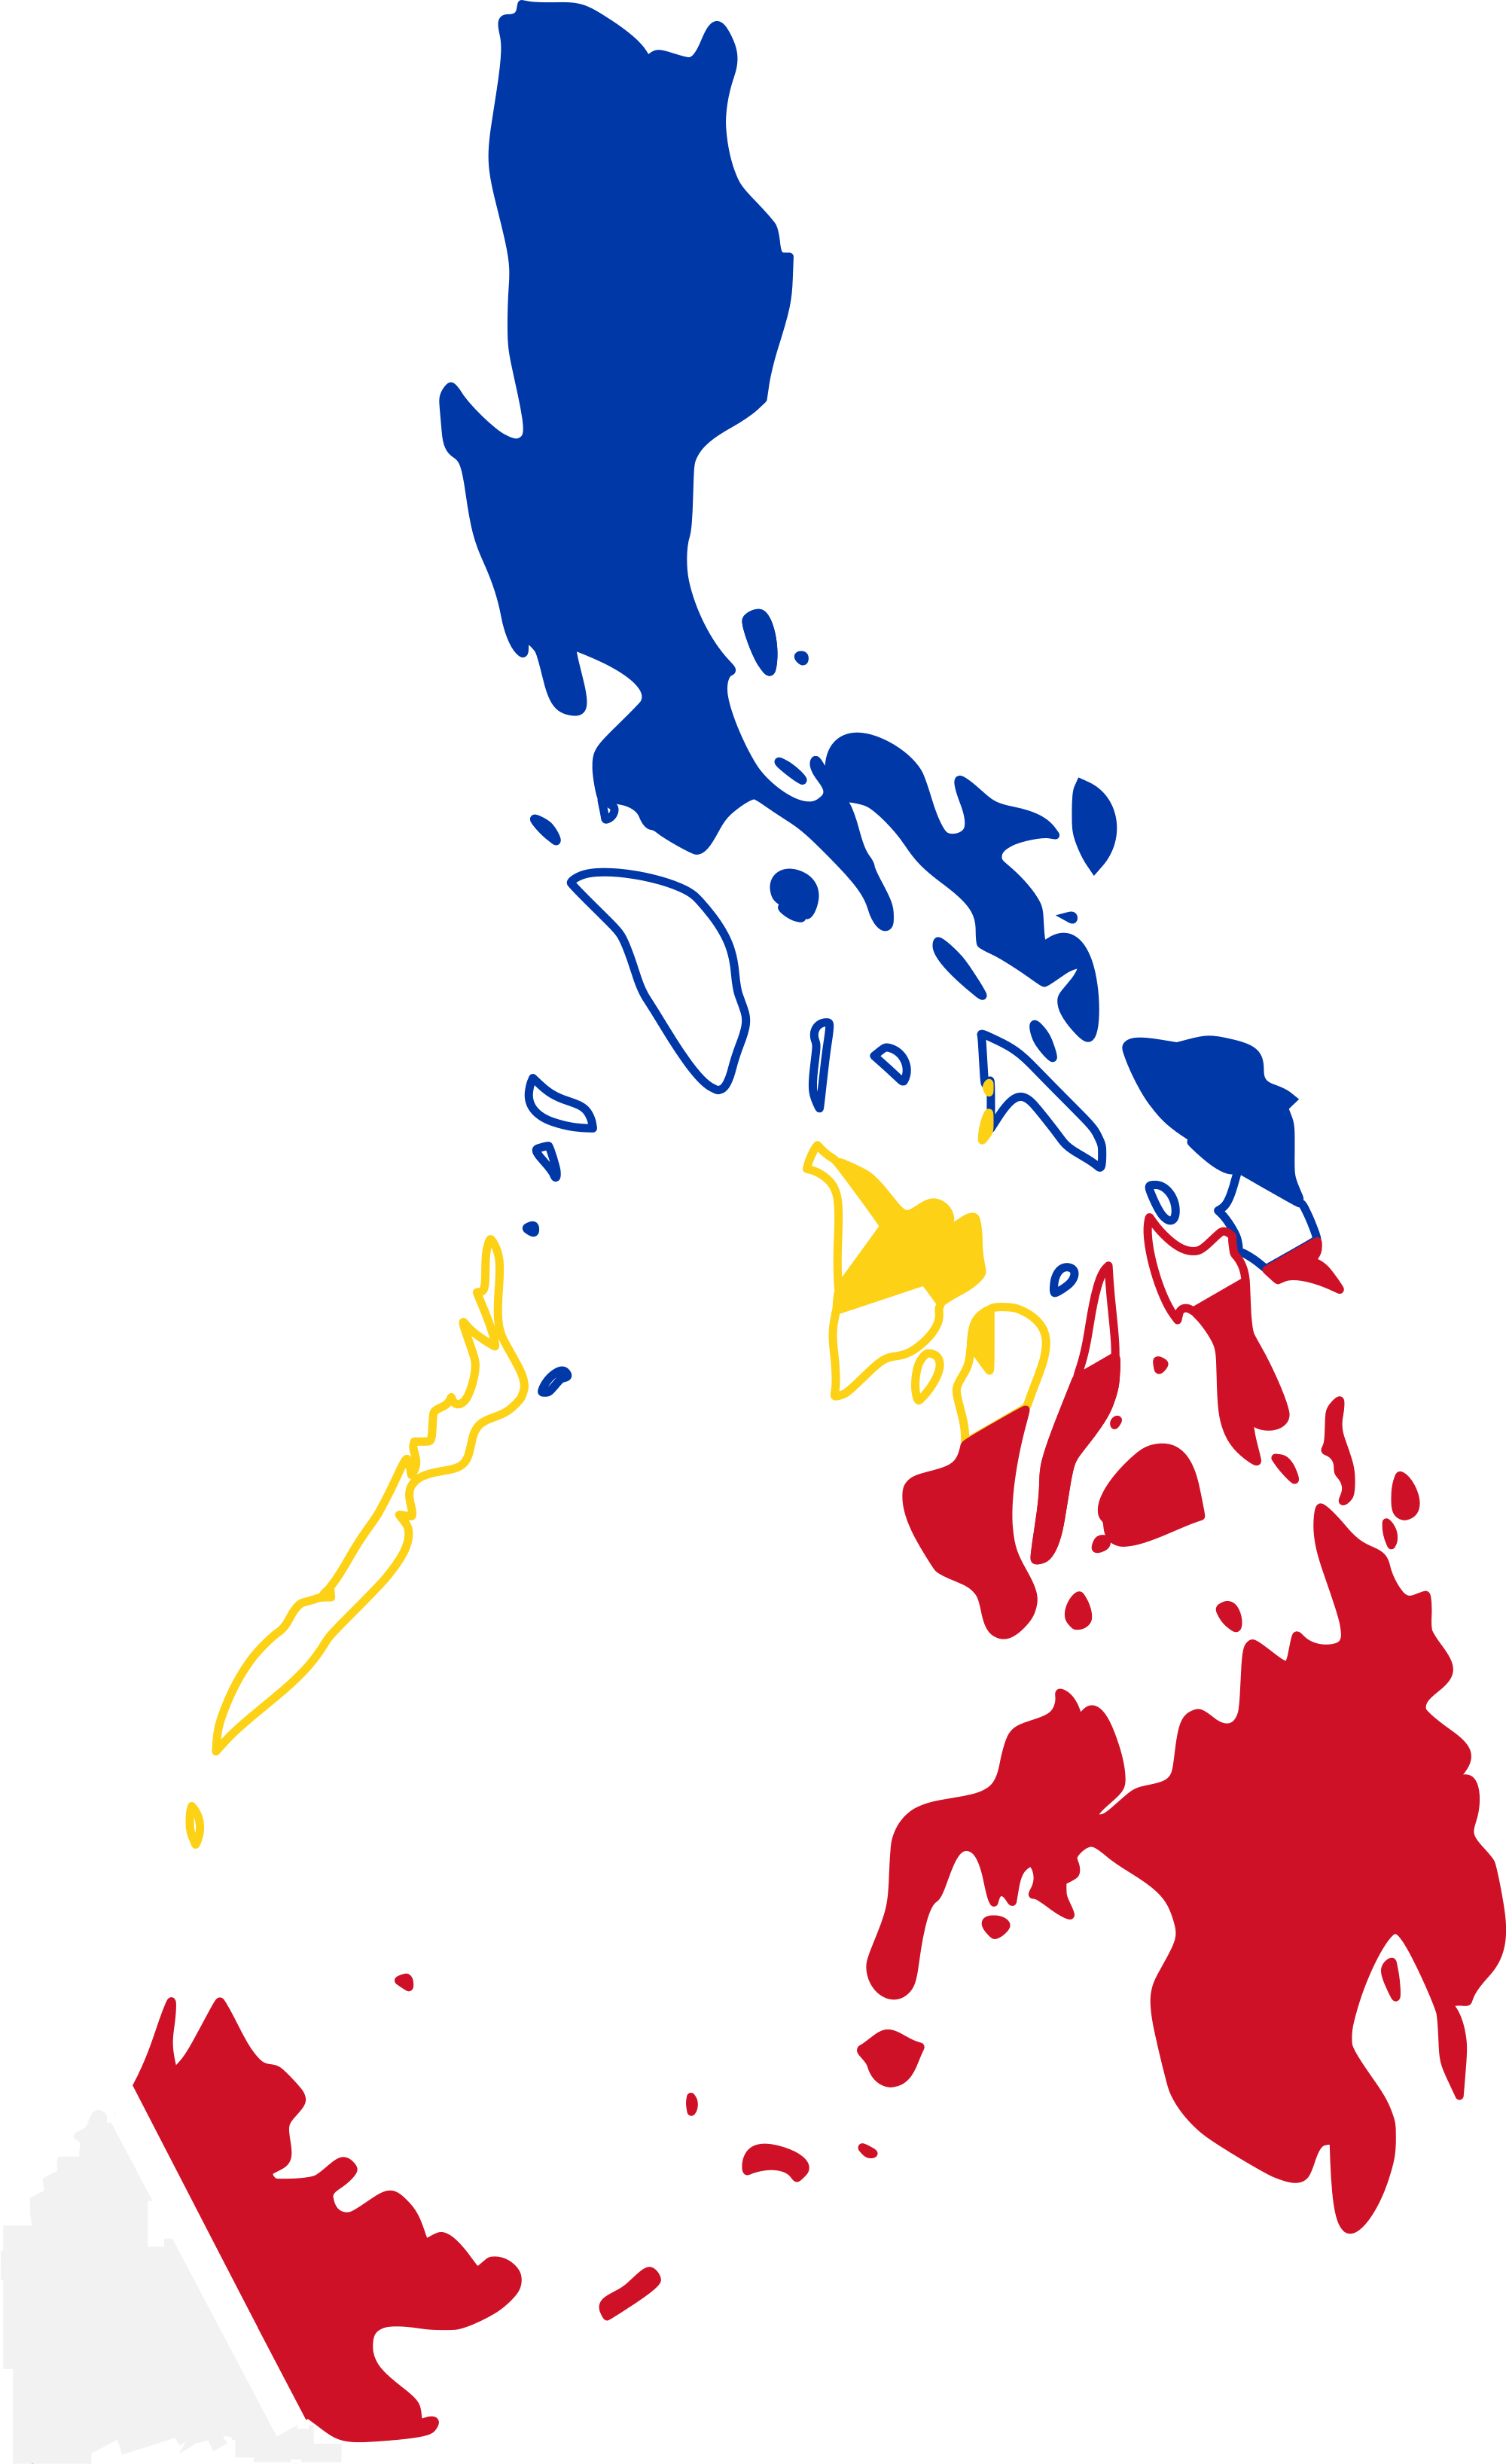 Philippine Map Vector - ClipArt Best